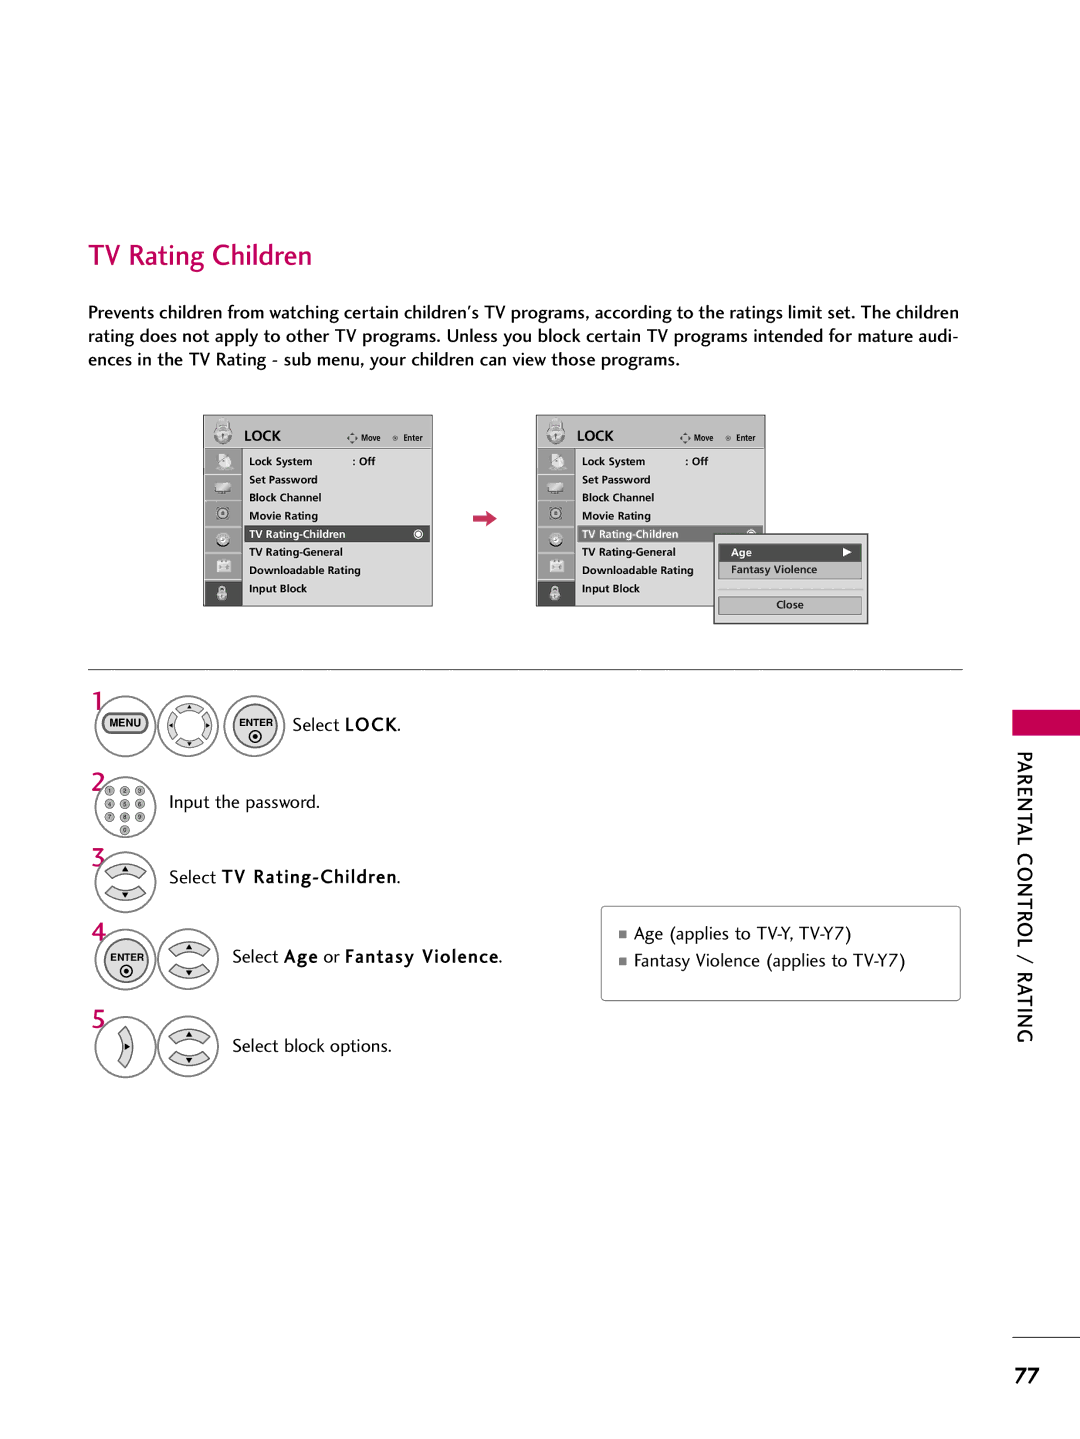 LG Electronics 223DCH TV Rating Children, Select TV Rating-Children Age applies to TV-Y, TV-Y7, Select block options 